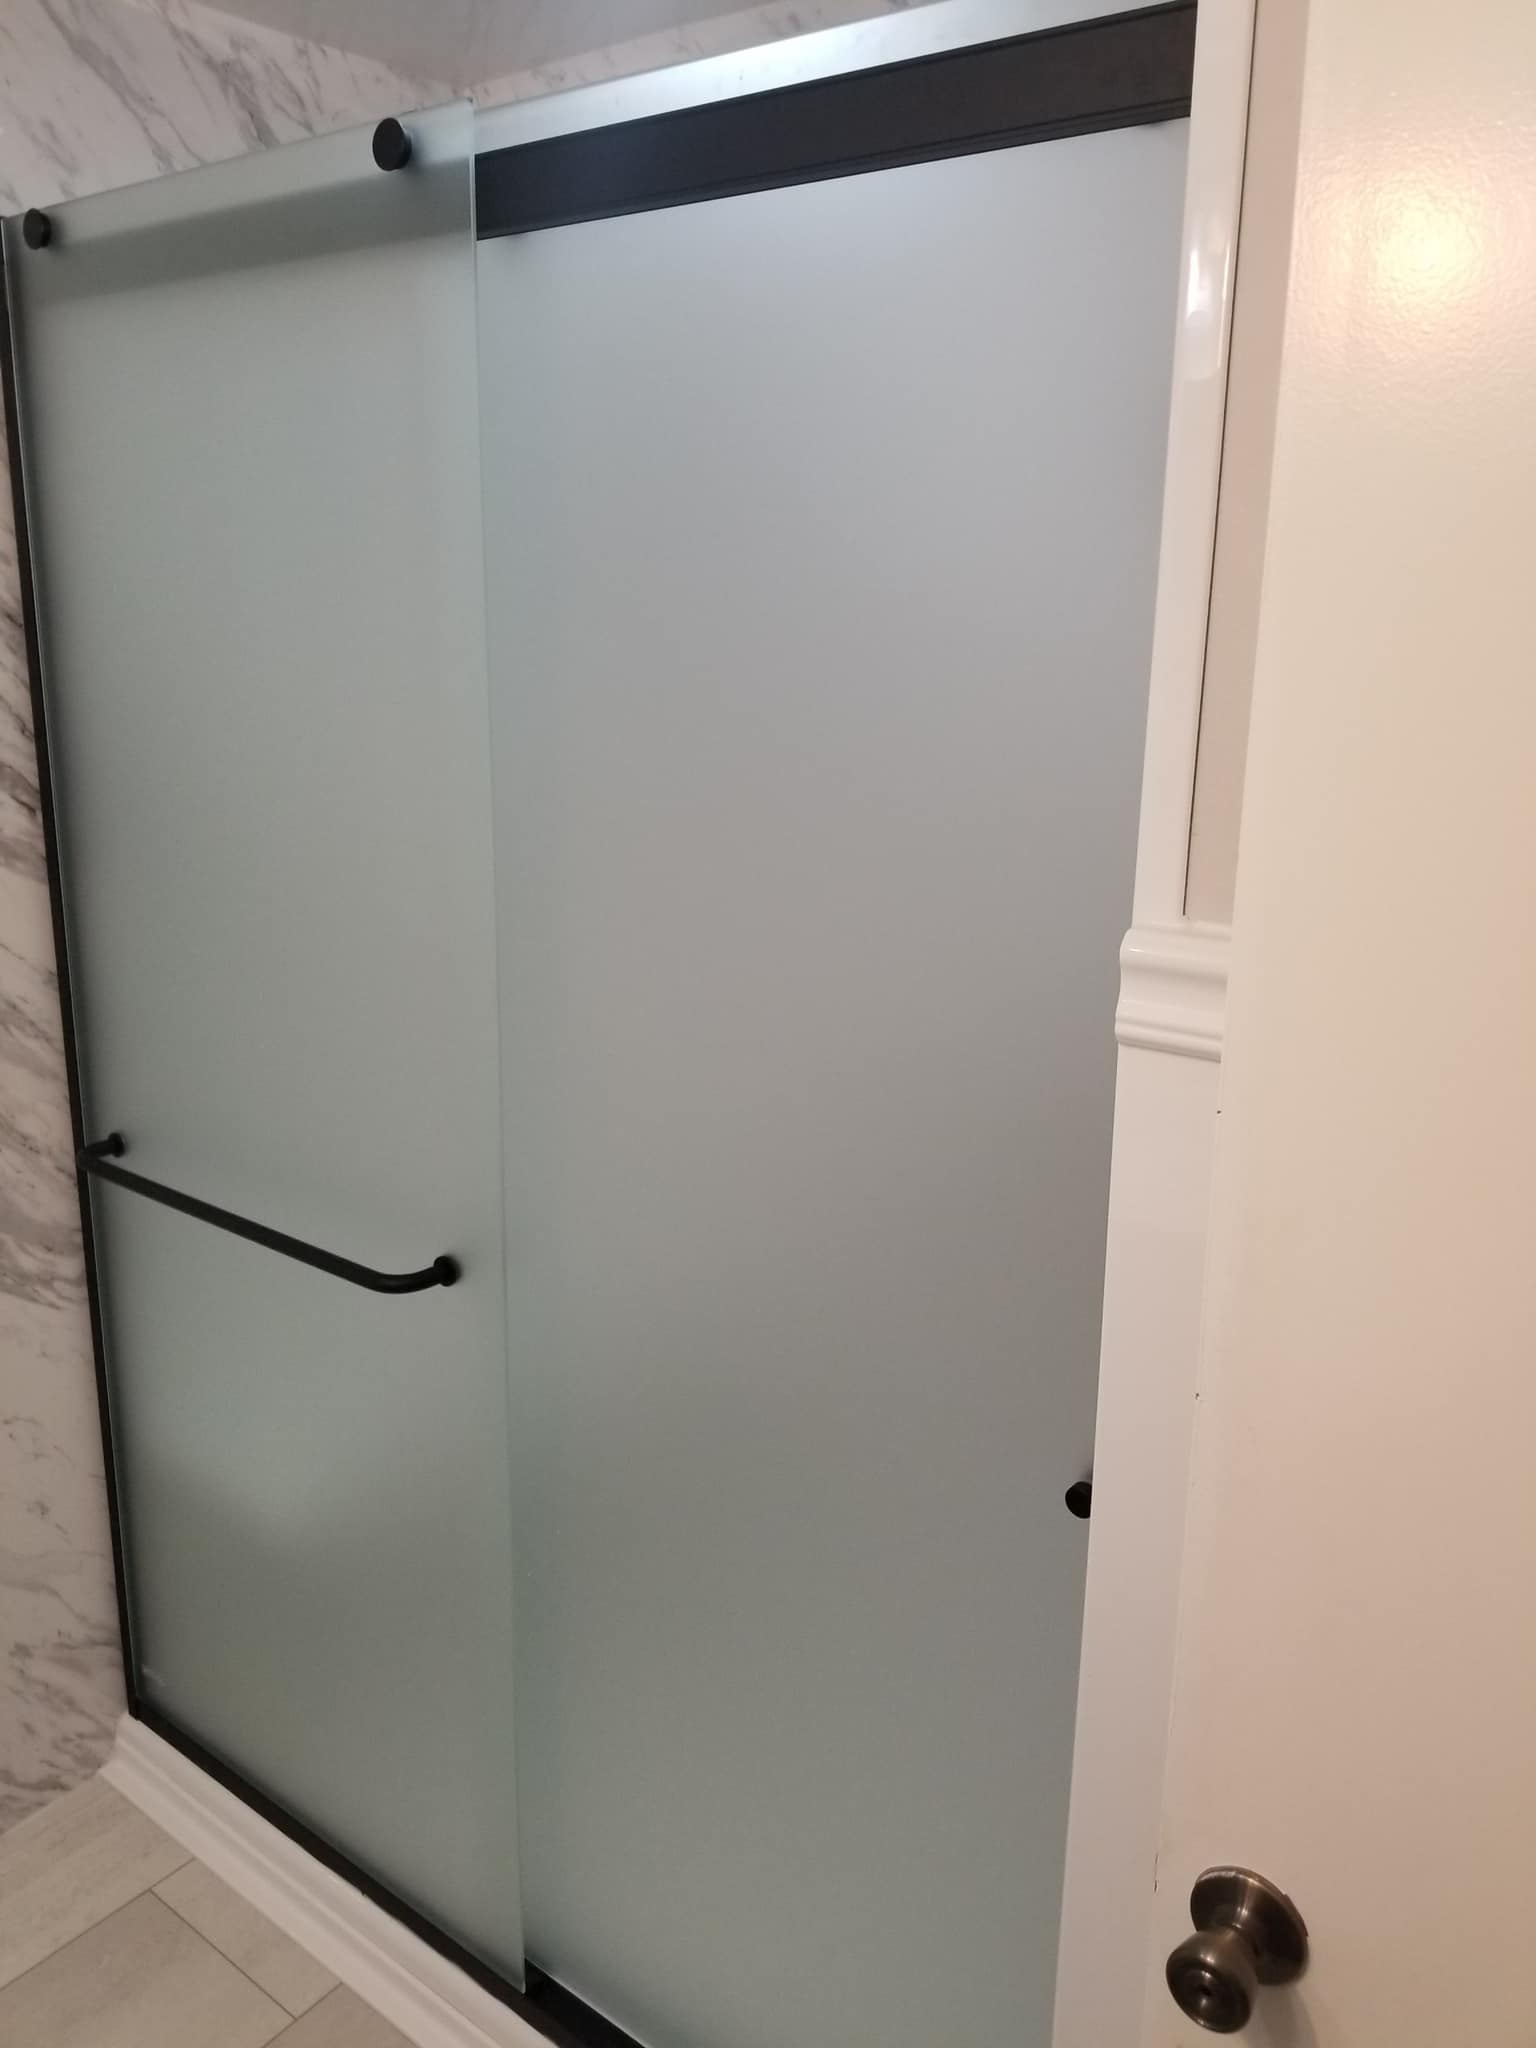 BATHROOM REMODELING NEAR ME DAYTON OHIO<br />
Frosted Shower Door